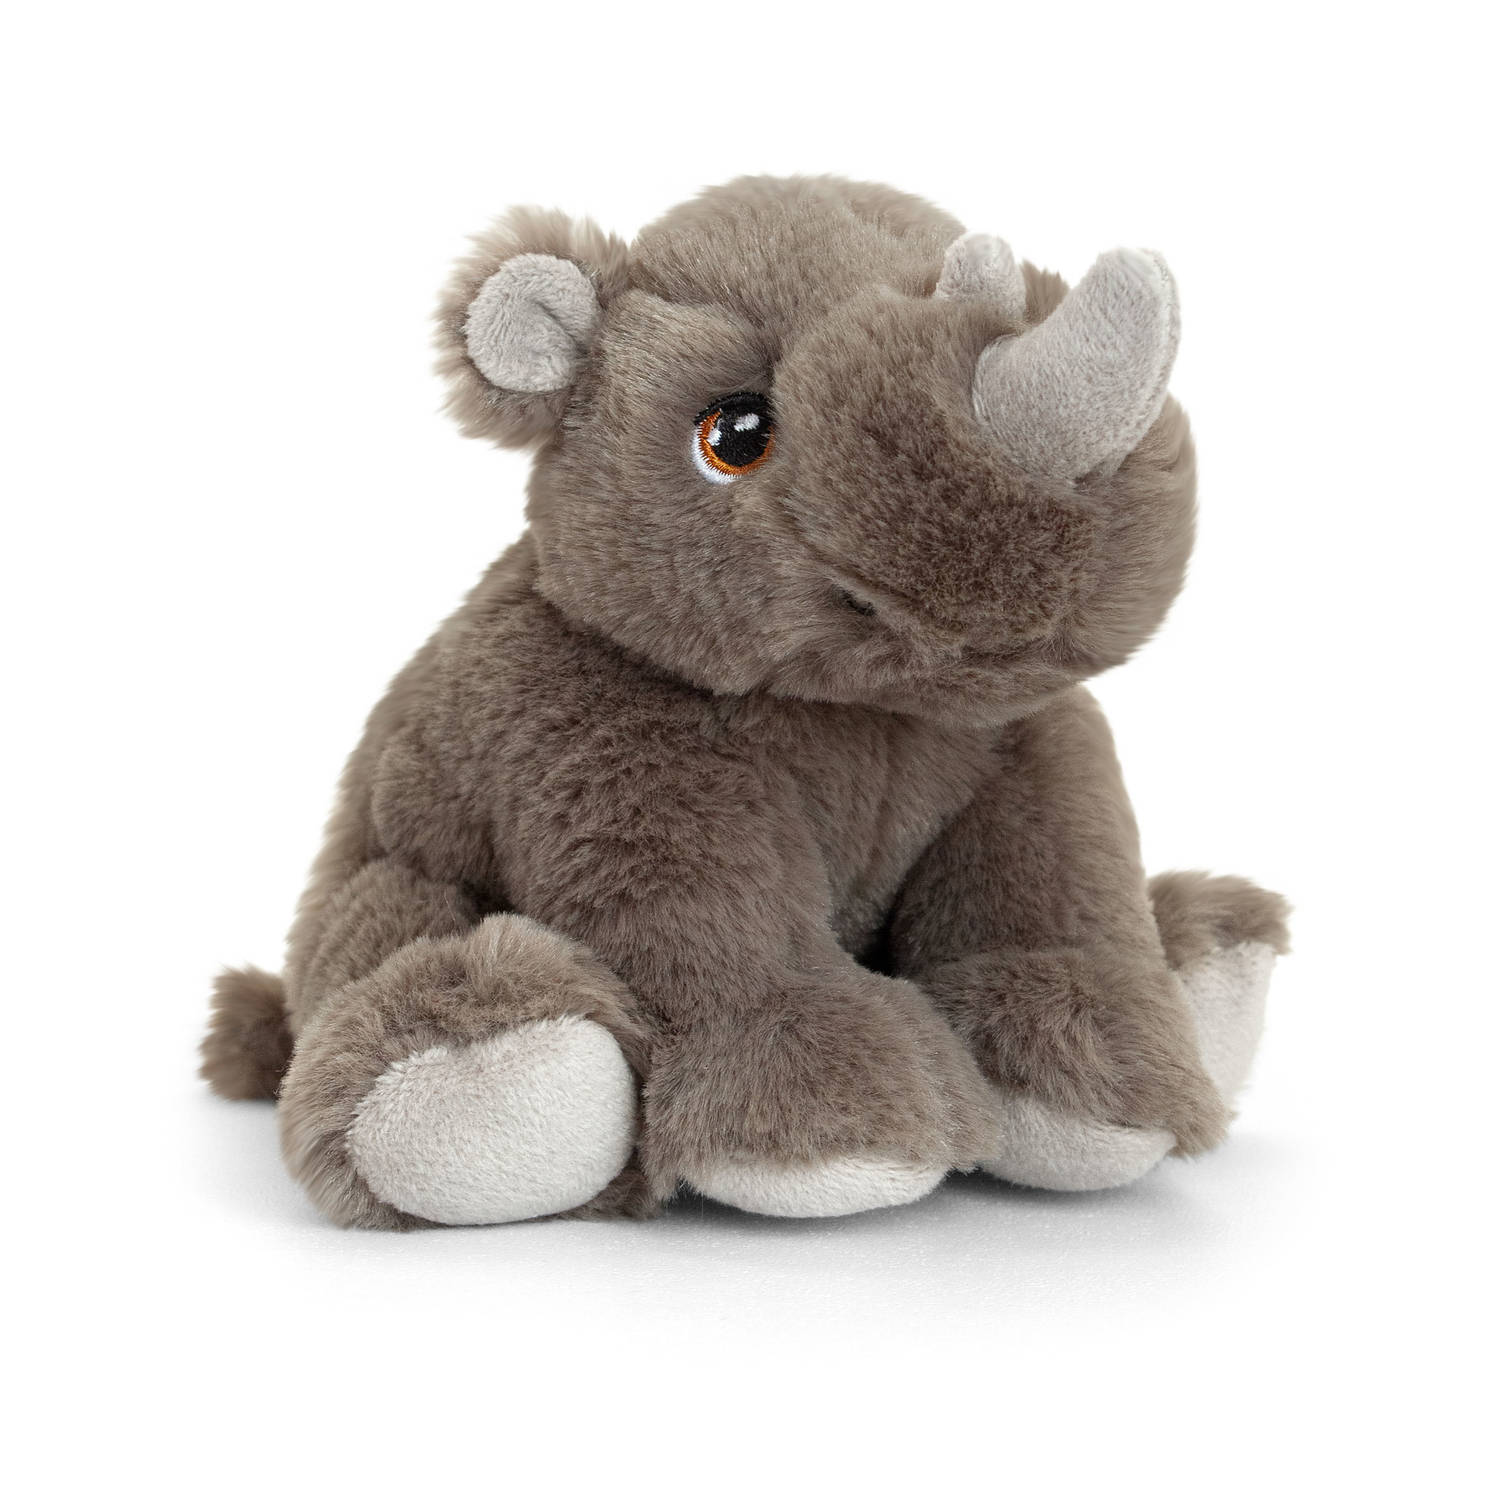 Pluche knuffel dieren neushoorn 25 cm - Knuffelbeesten speelgoed